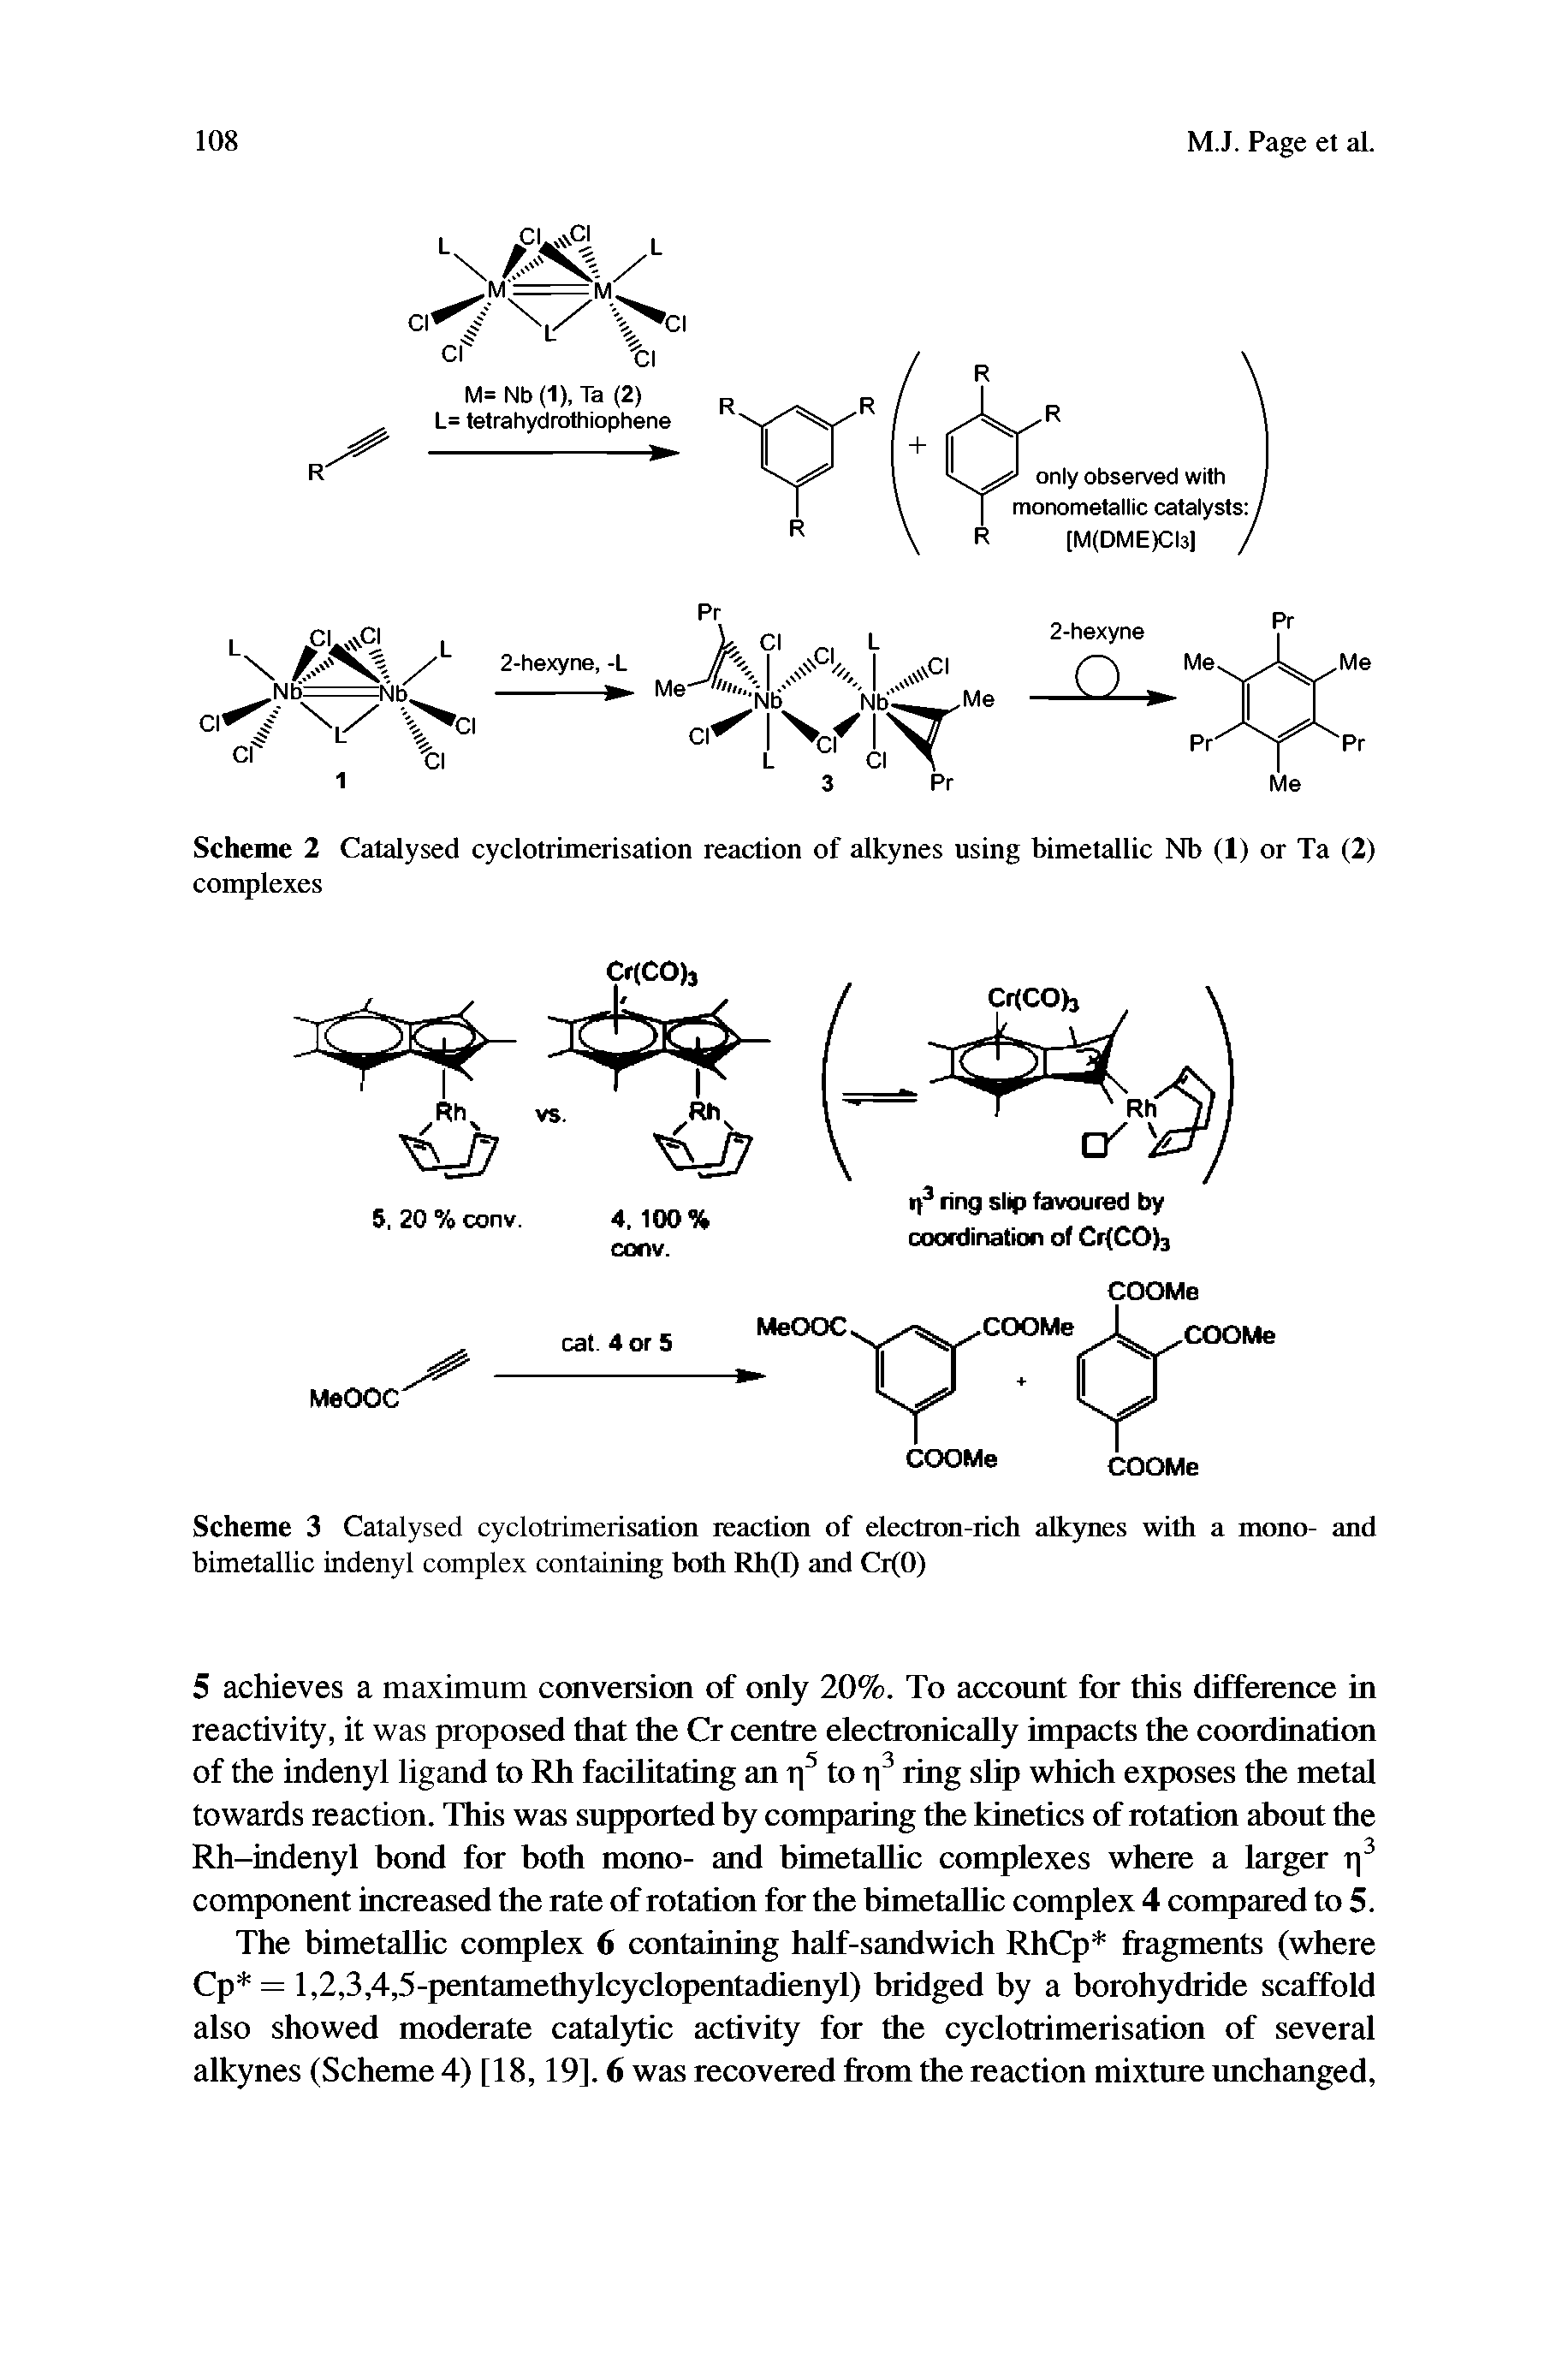 Scheme 2 Catalysed cyclotrimerisation reaction of alkynes using bimetallic Mb (1) or Ta (2) complexes...